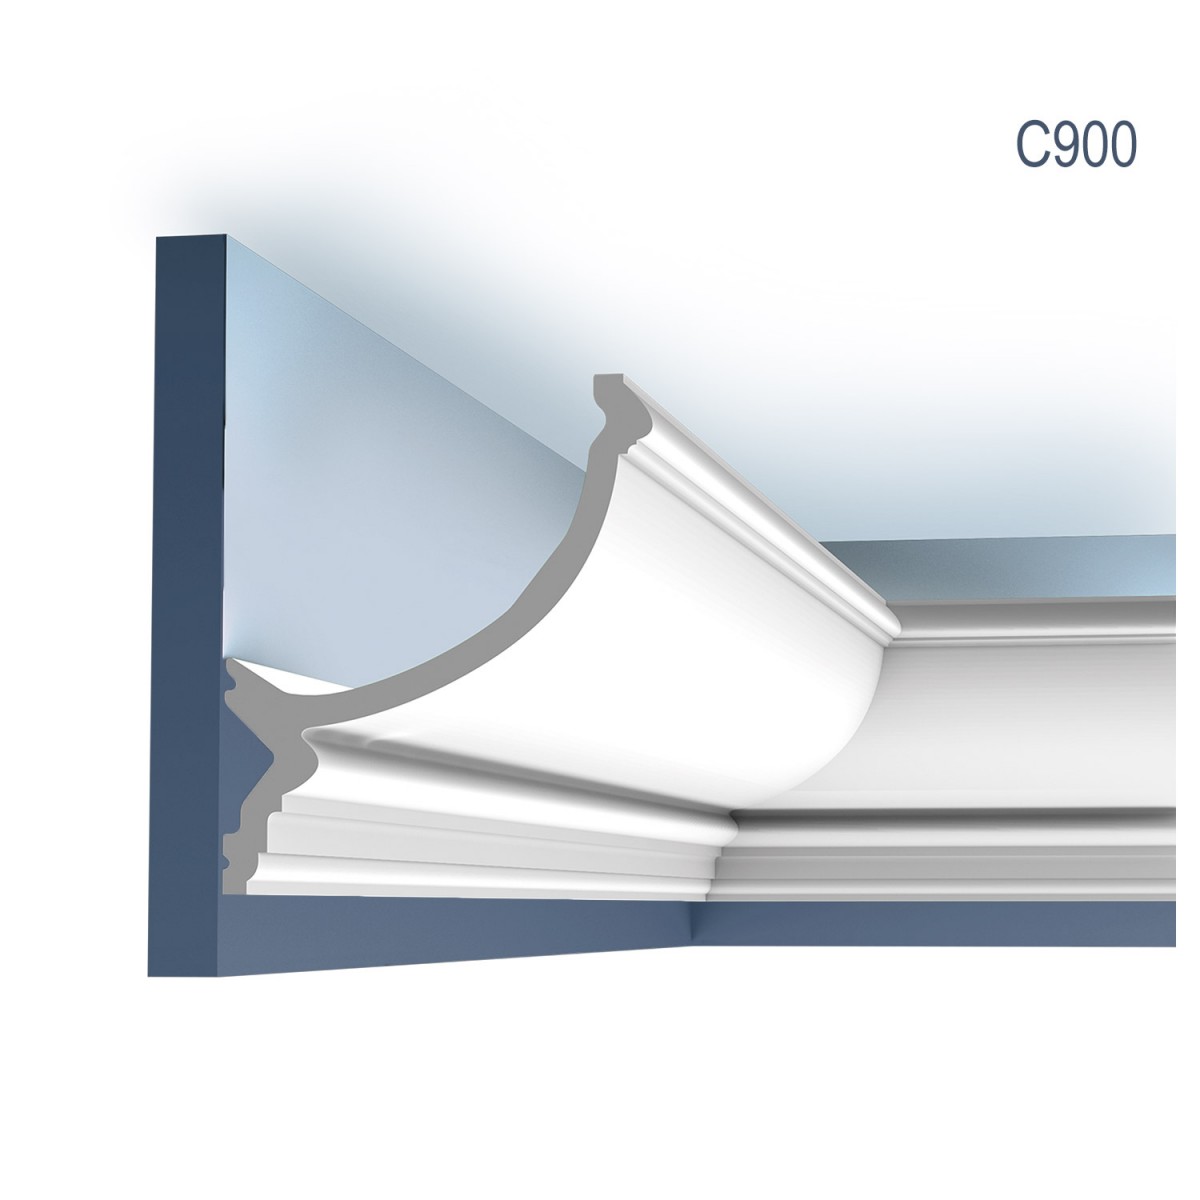 Scafe tavan (iluminat indirect, LED) Orac Decor ORC-C900, material: PUROTOUCH®